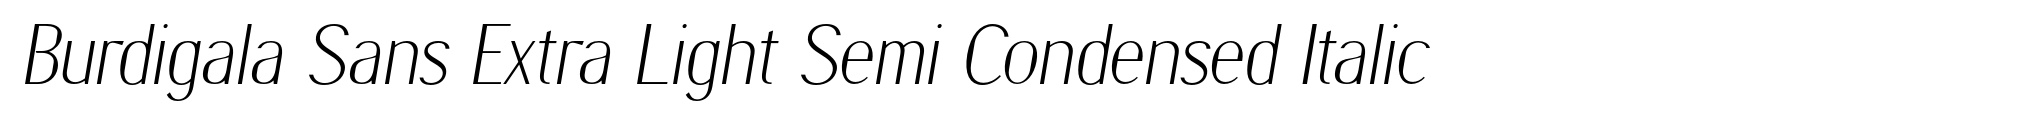 Burdigala Sans Extra Light Semi Condensed Italic image